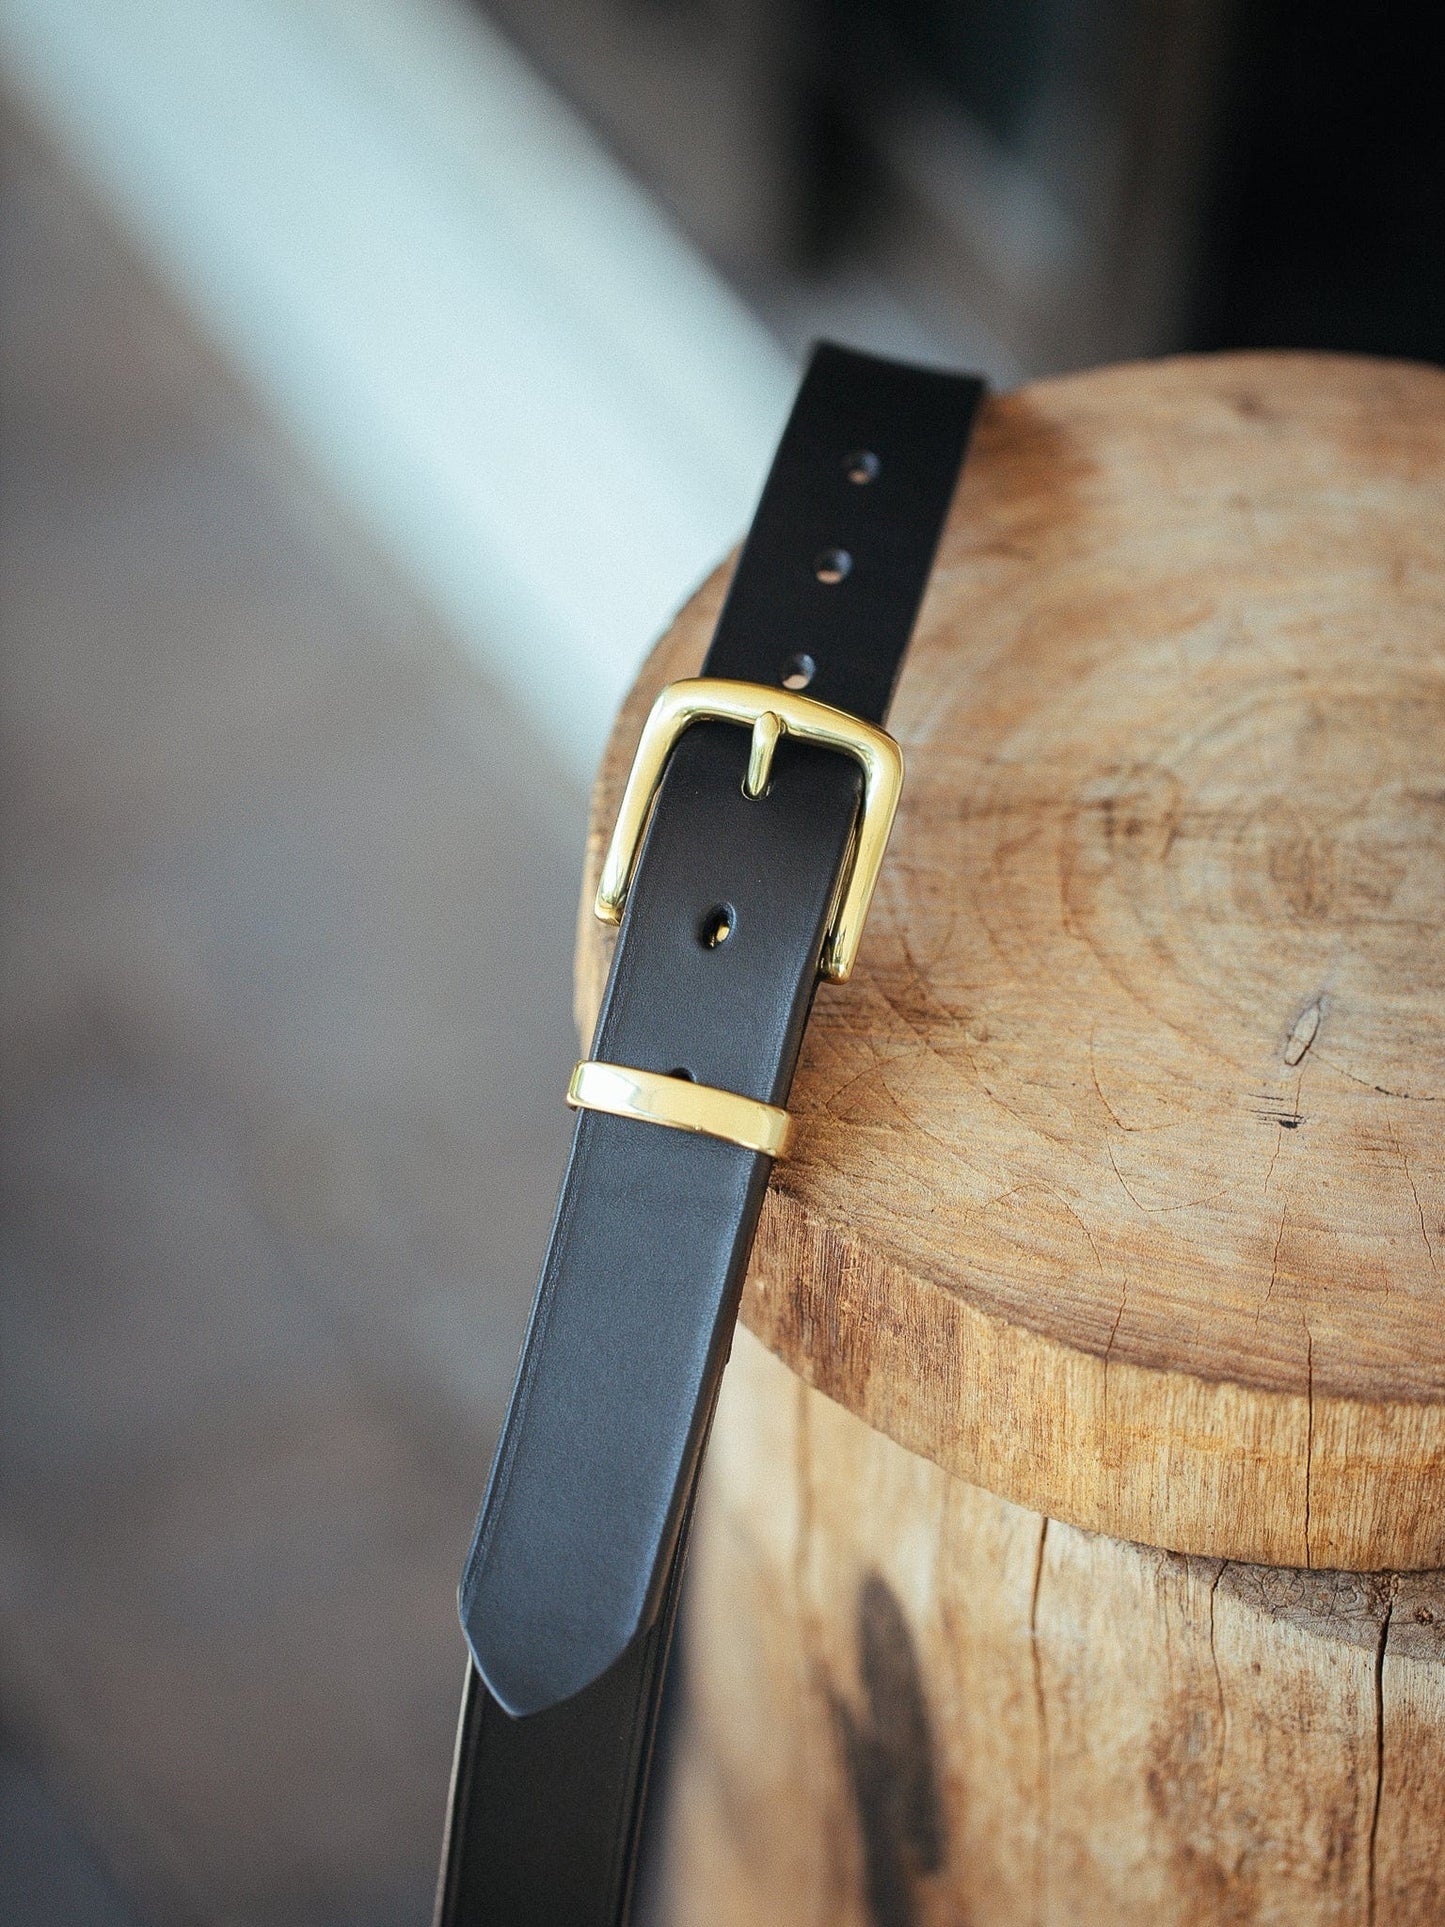 Brush belt buckle & Leather strap 32 mm